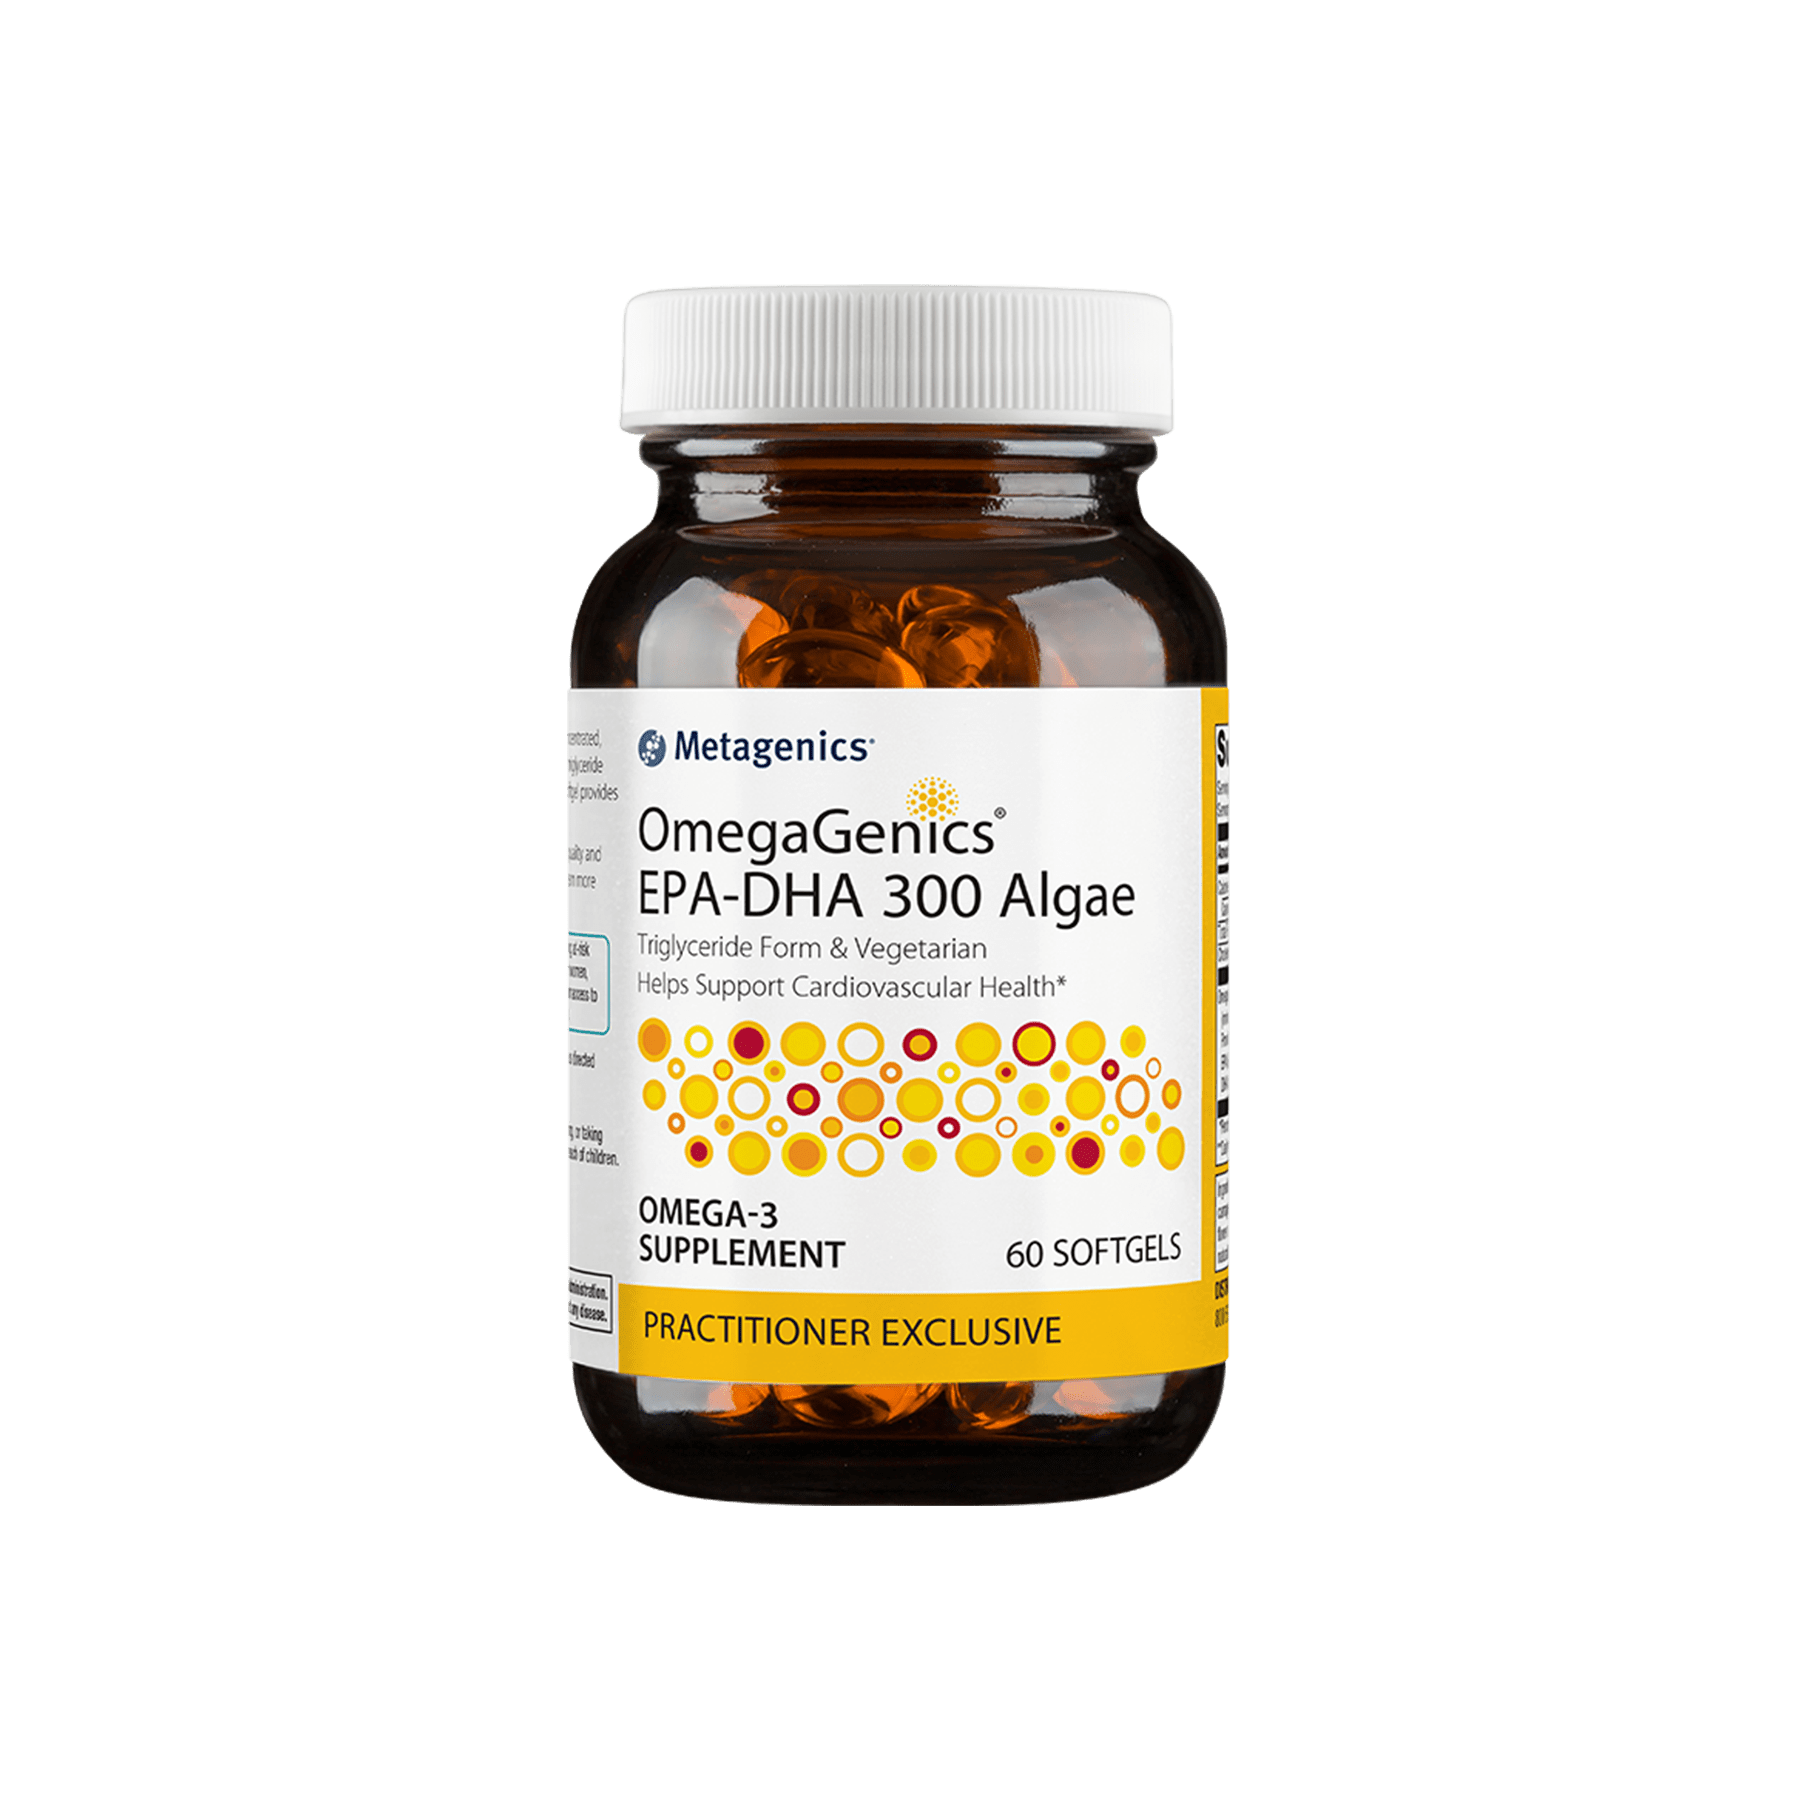 Omegagenics EPS-DHA ALgae